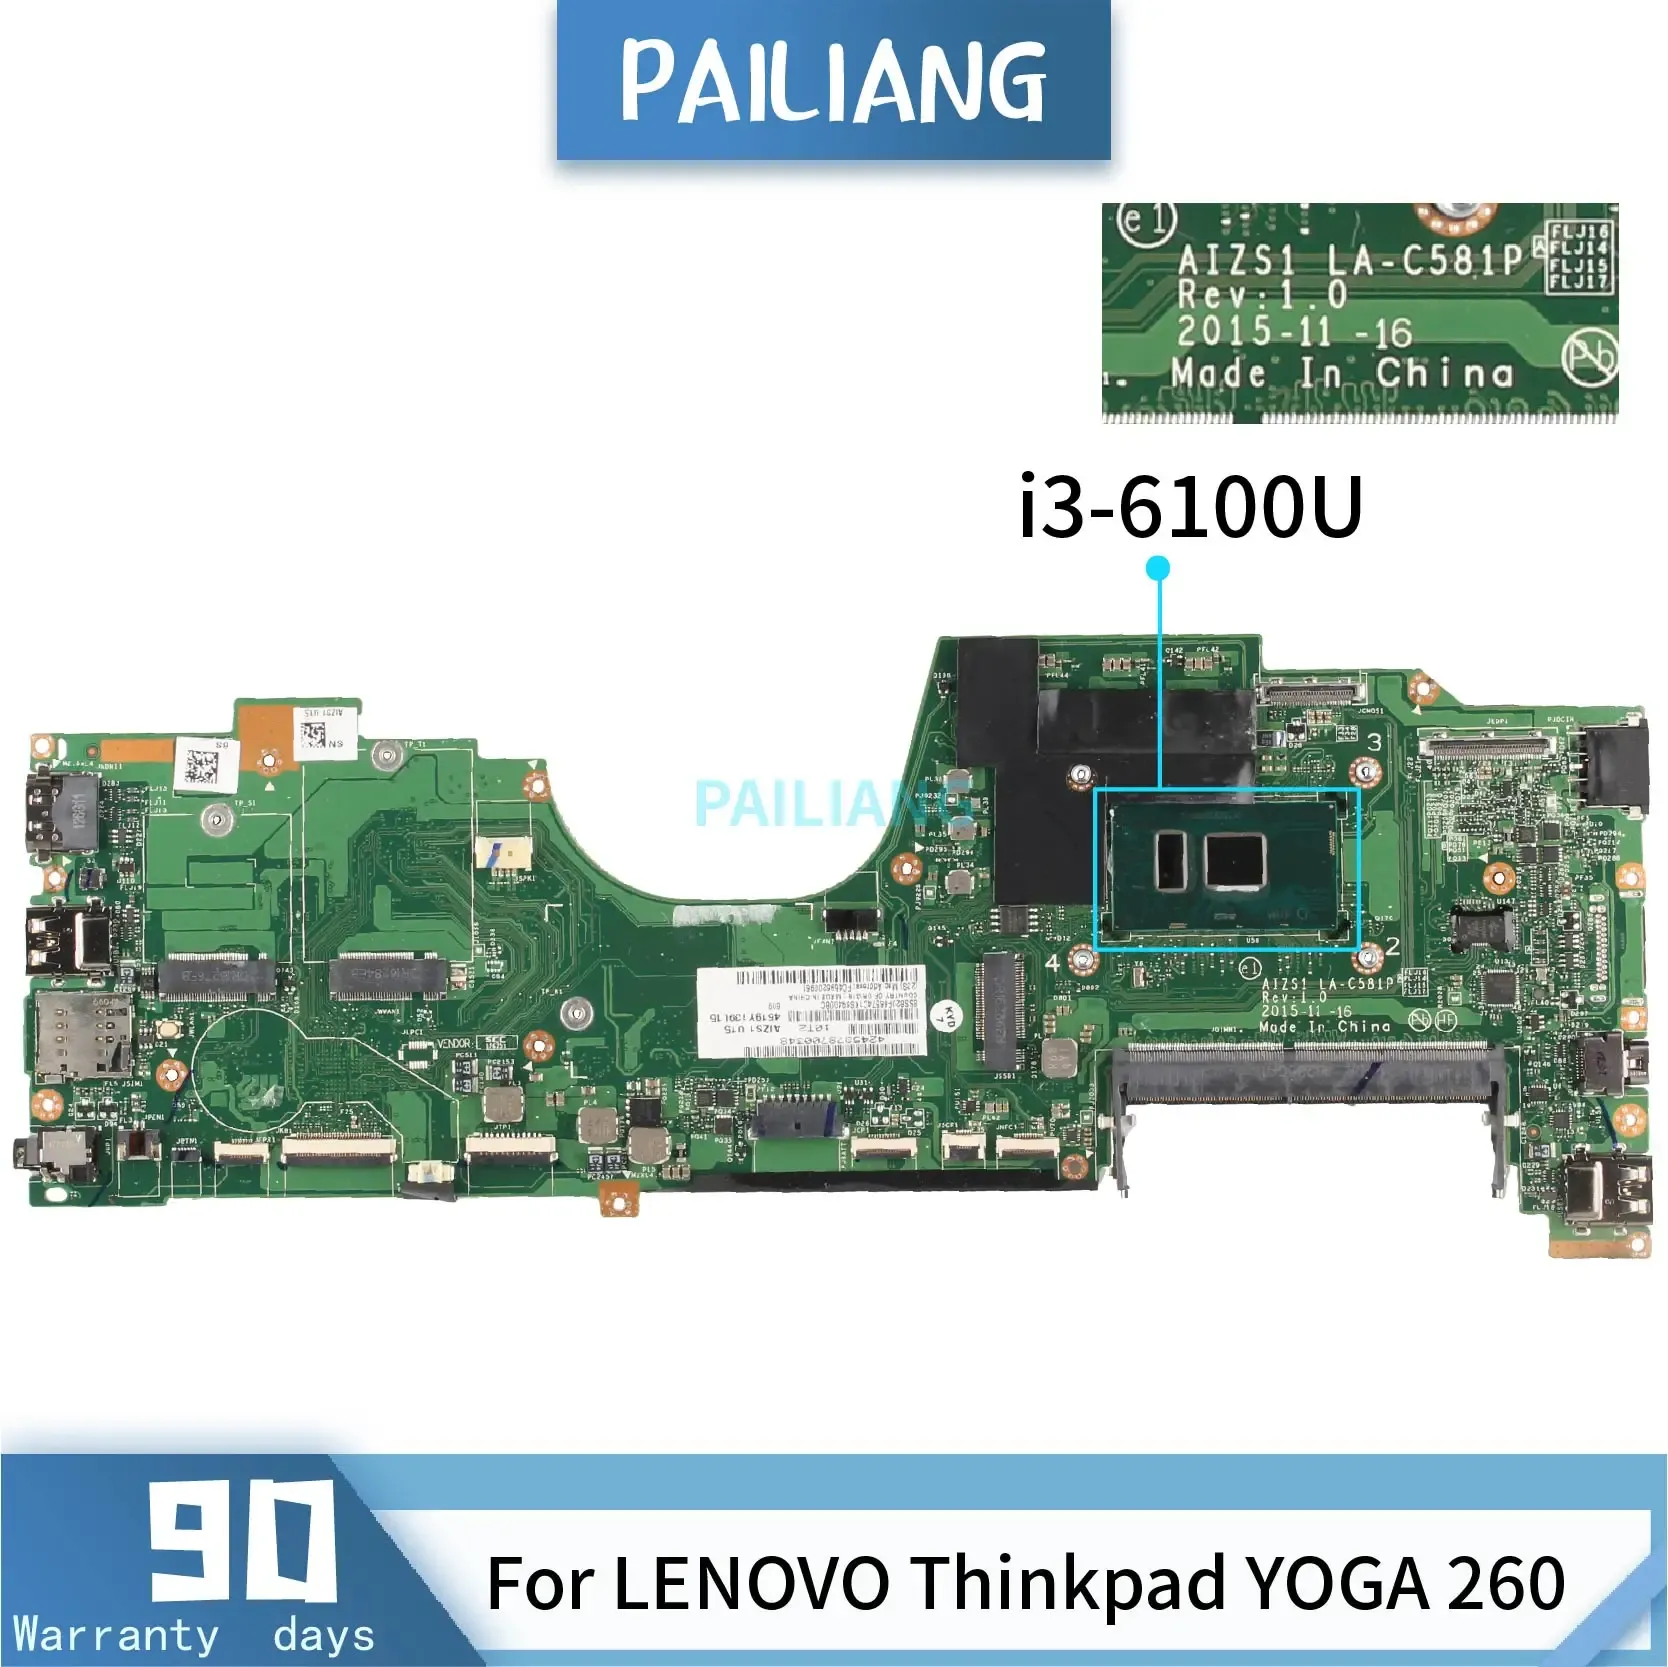 Lenovo ThinkPad Yoga 260ラップトップマザーボードAIZS1 SR2EU I36100UノートブックメインボードテストDDR3